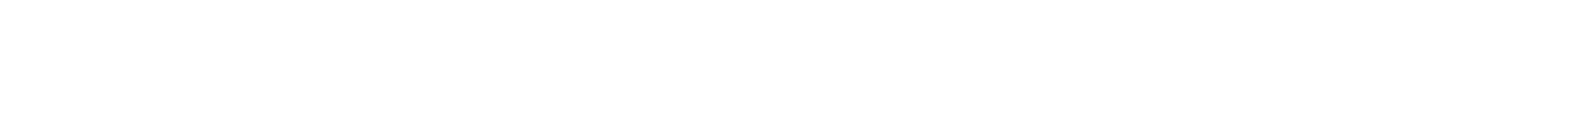 Skechers Brand Logo 2019.png